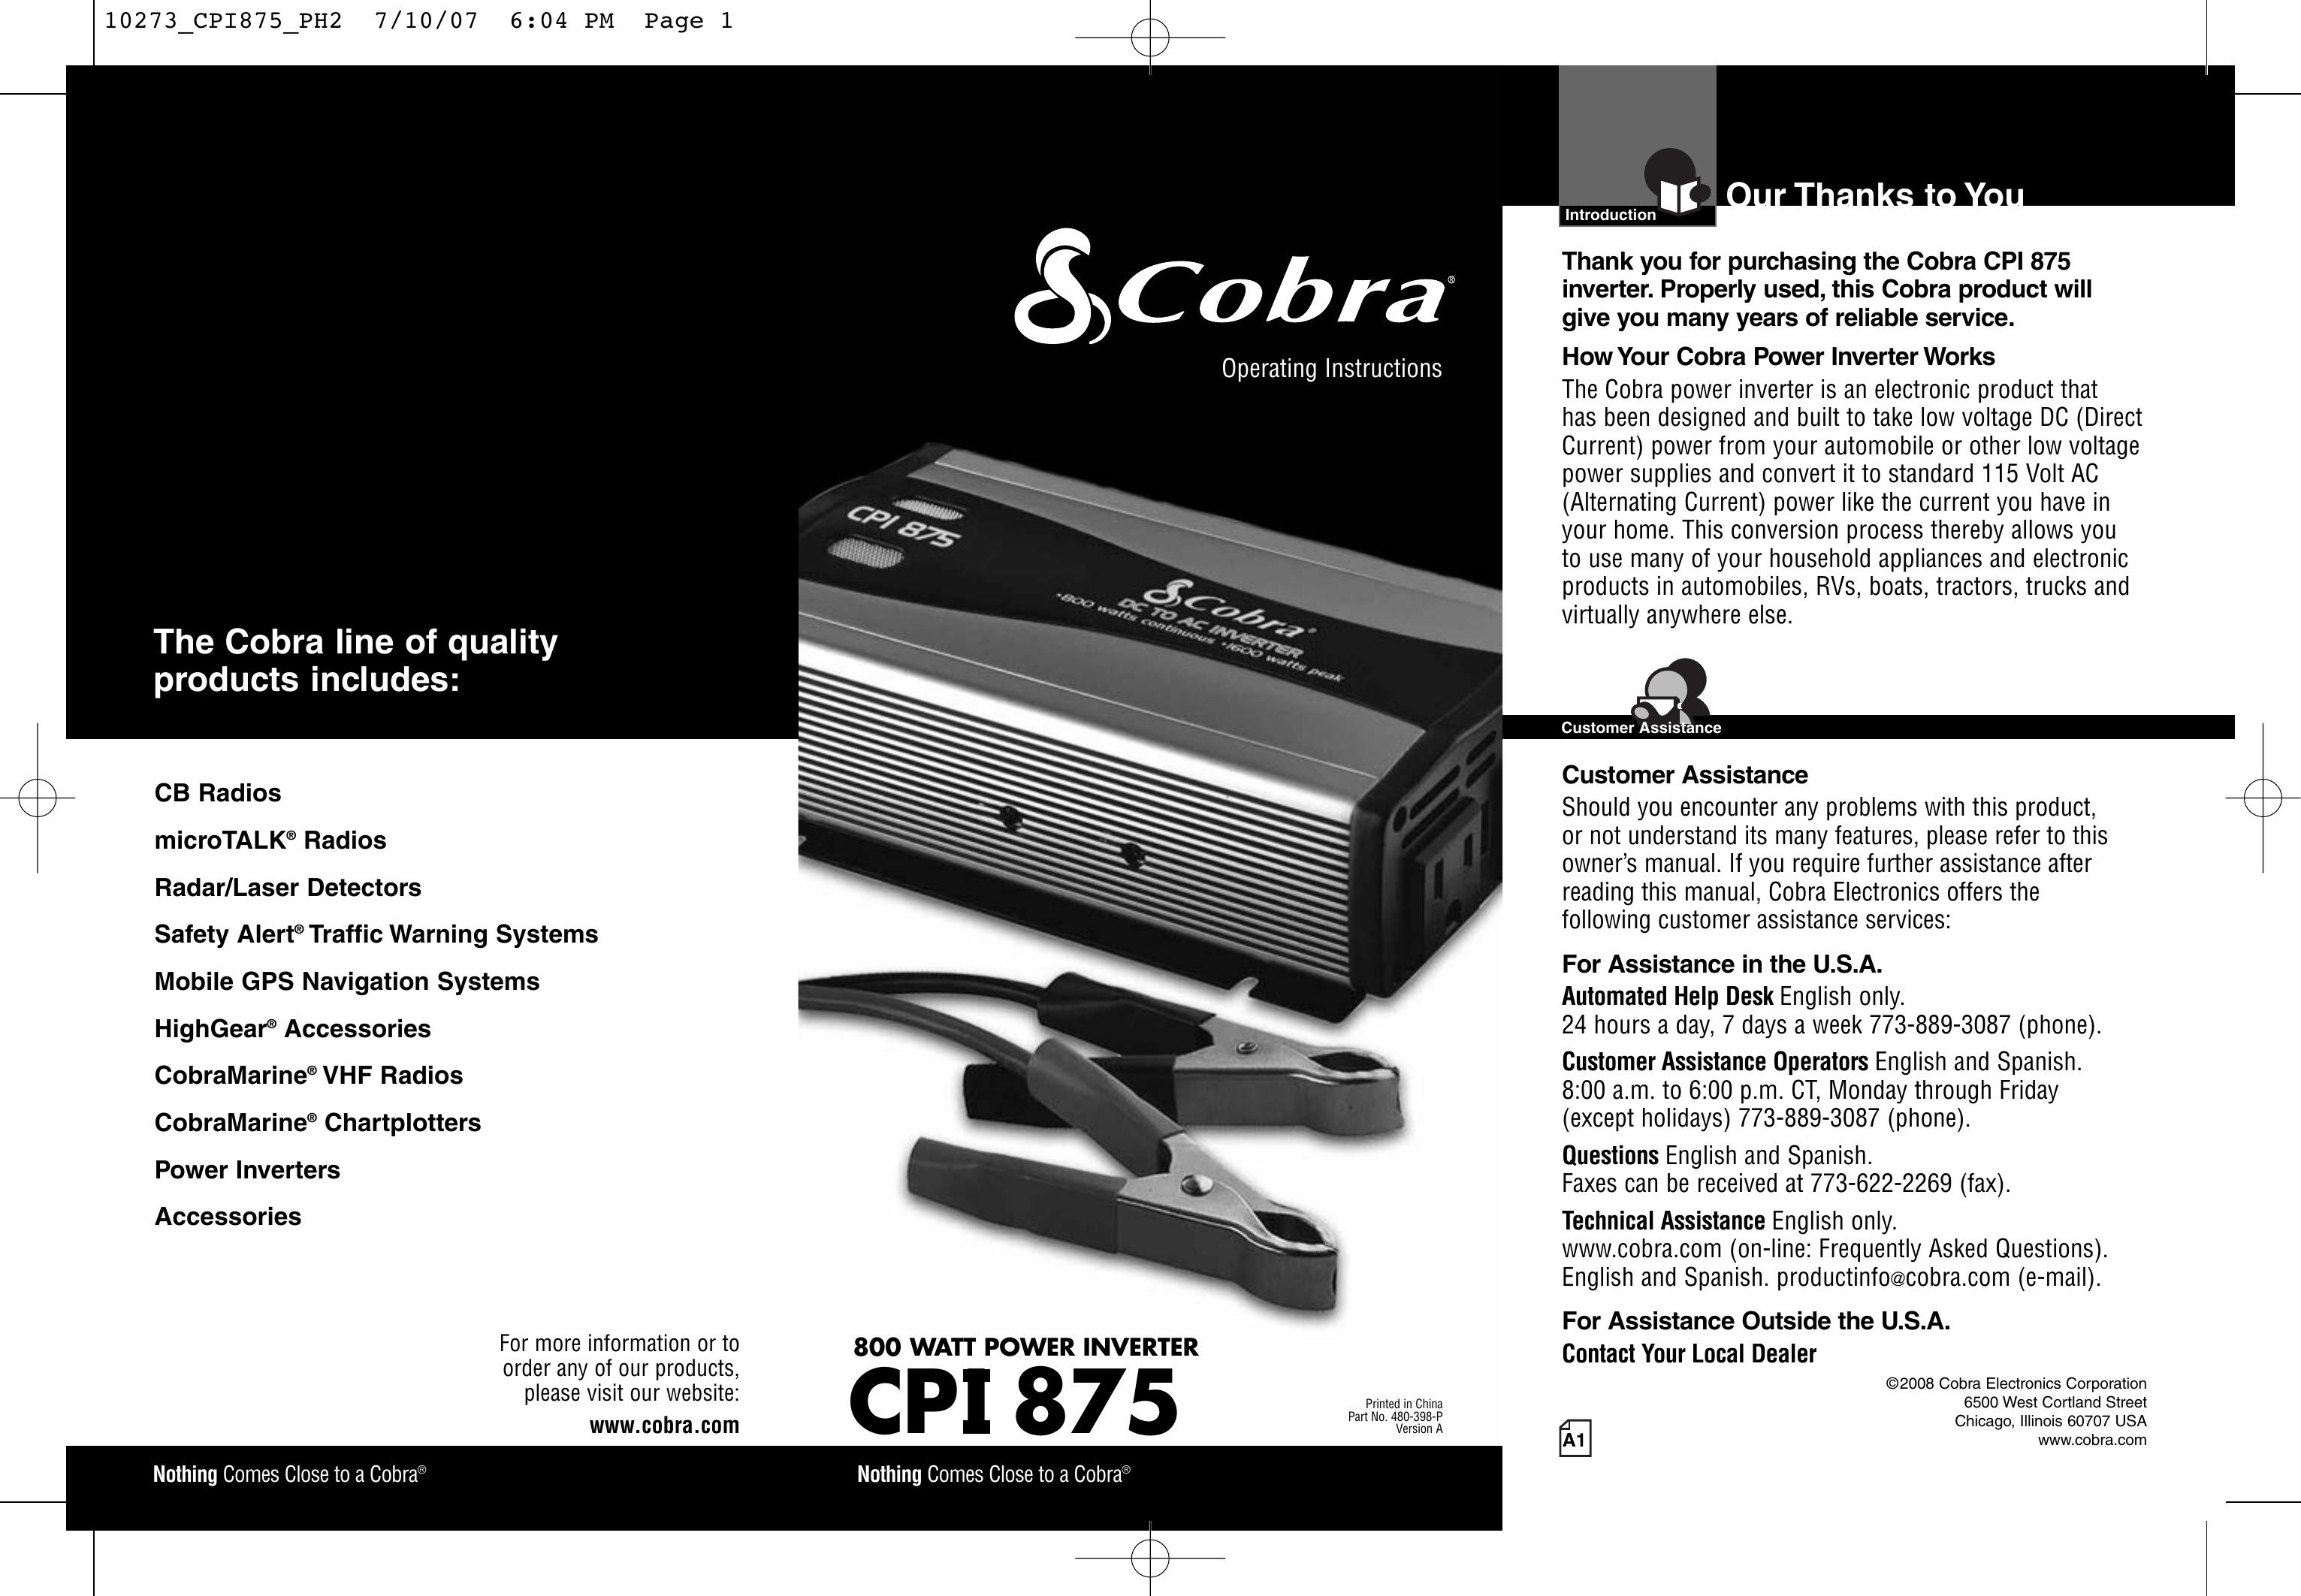 Cobra Electronics CPI 875 Marine Battery User Manual